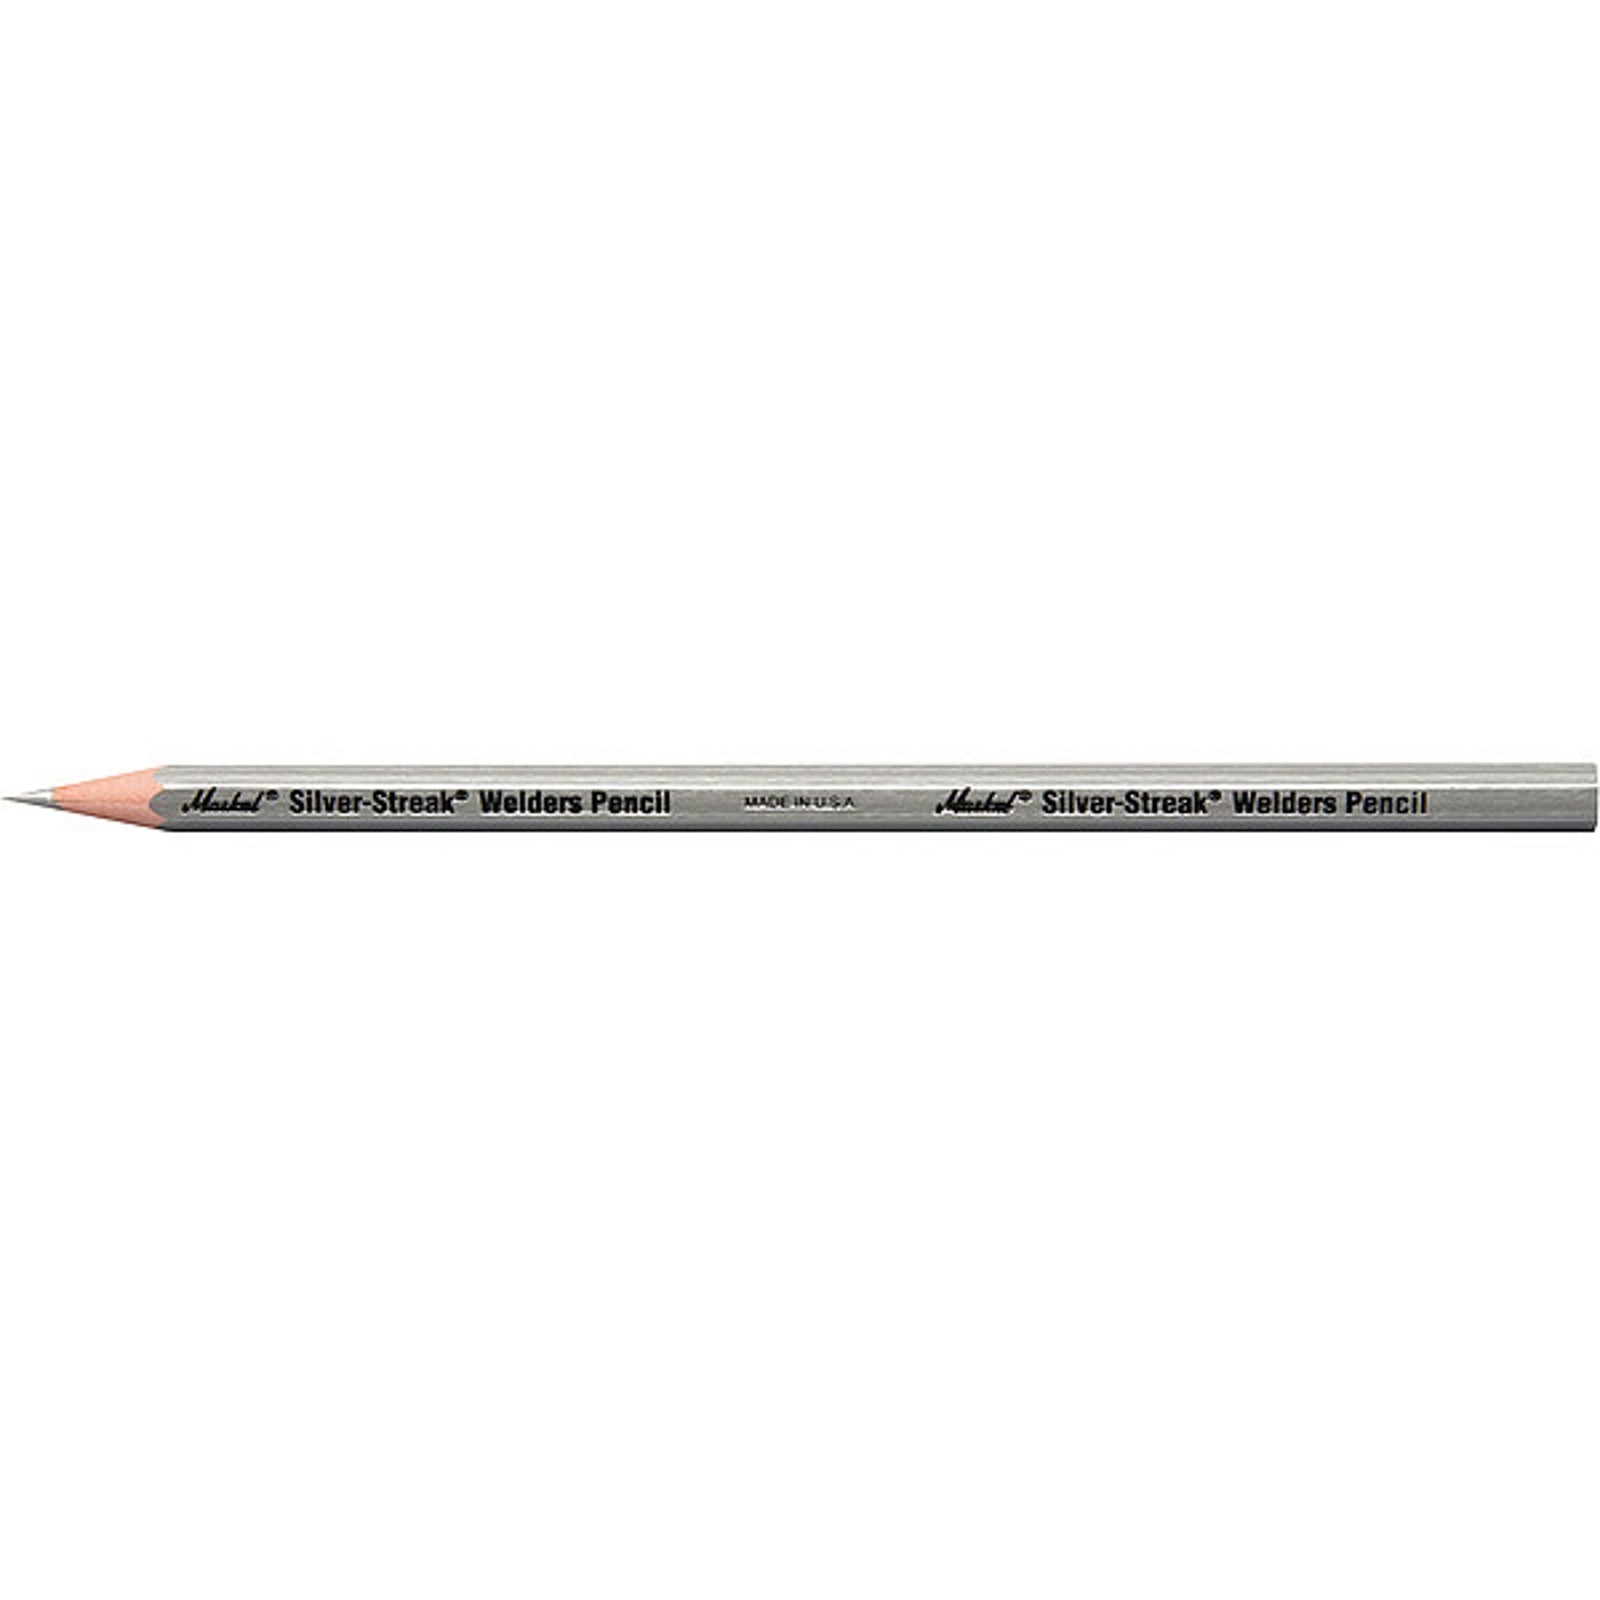 Tondiamo 48 Packs Silver Pencil Welders Pencil Metallic Silver